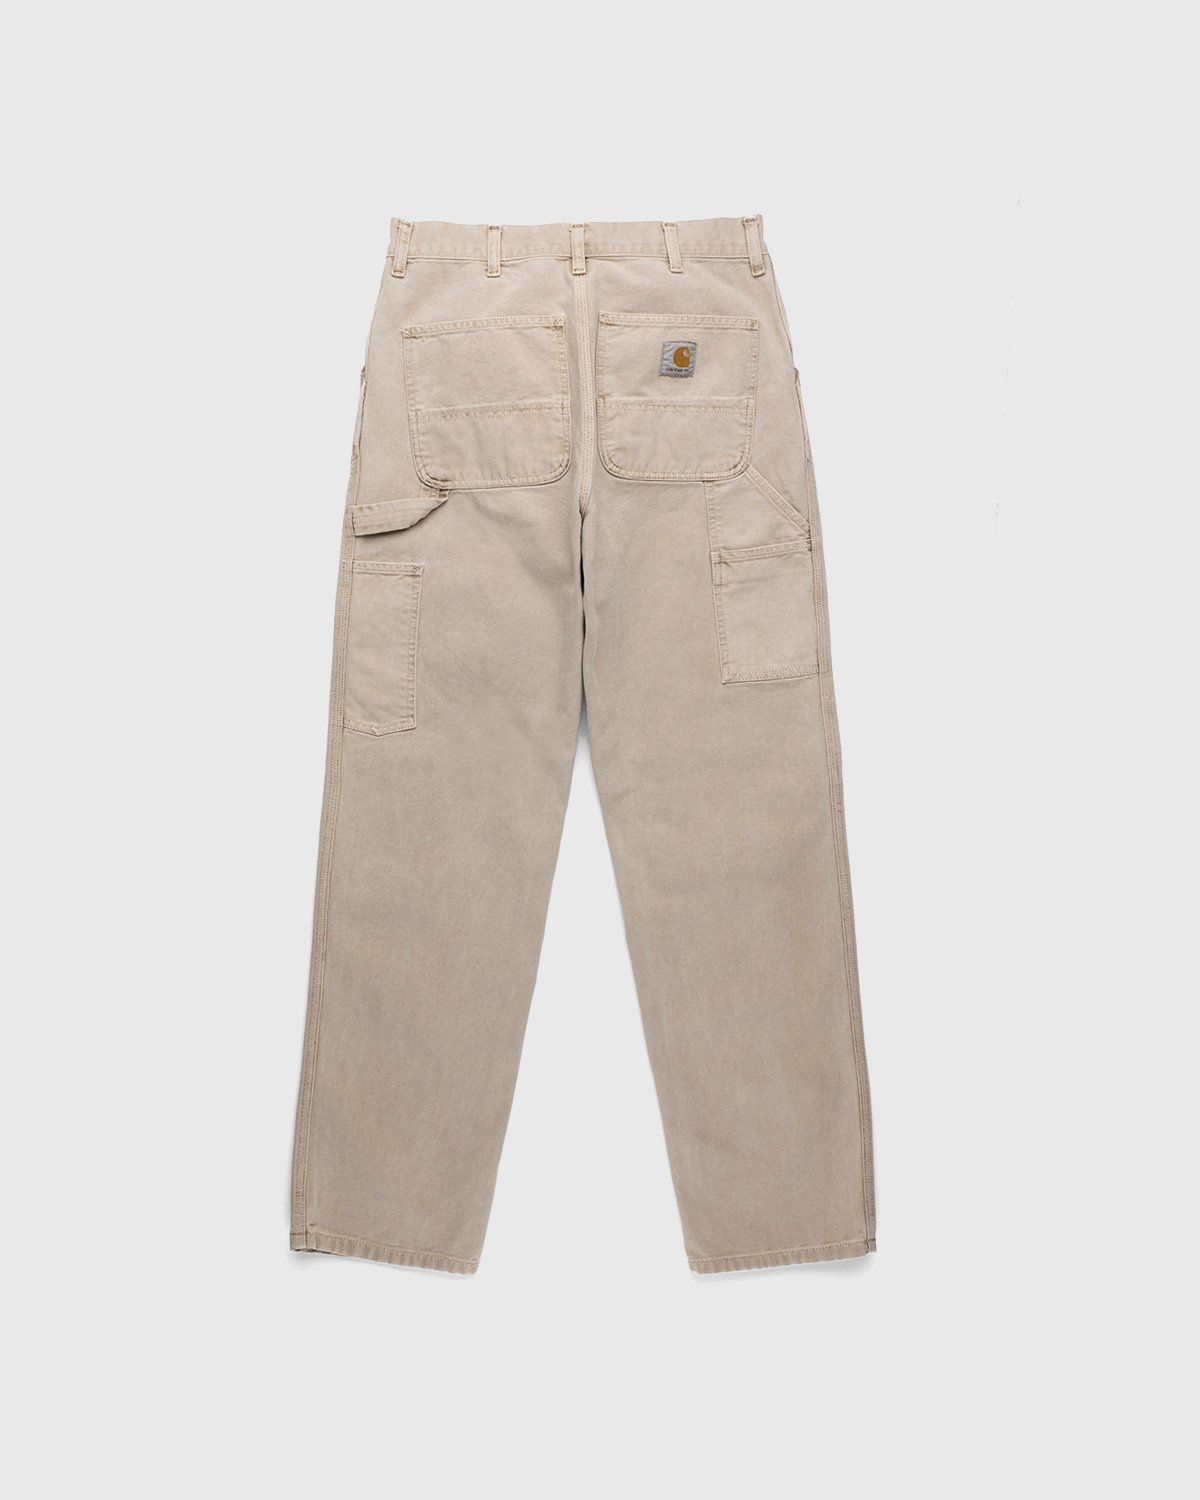 Carhartt WIP – Single Knee Pant Dusty Hamilton Brown Faded - Trousers - Beige - Image 2